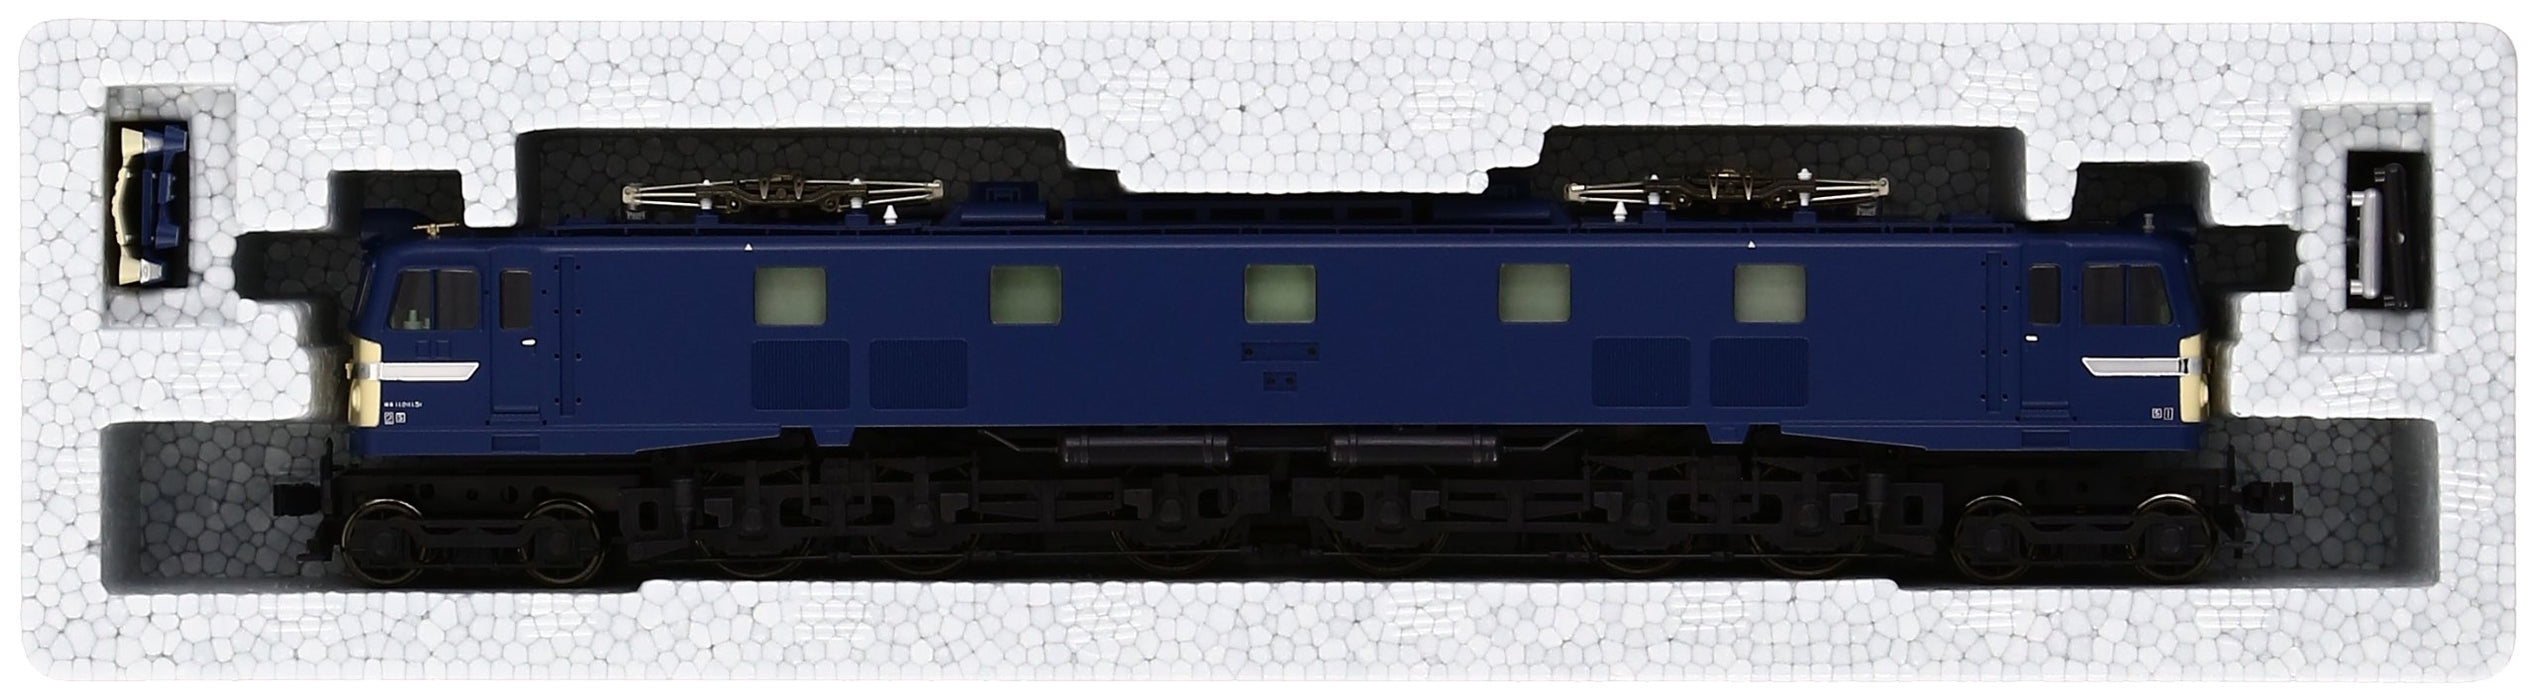 Kato HO Gauge Ef58 Blue Electric Locomotive - Large Window 1-301 Railway Model